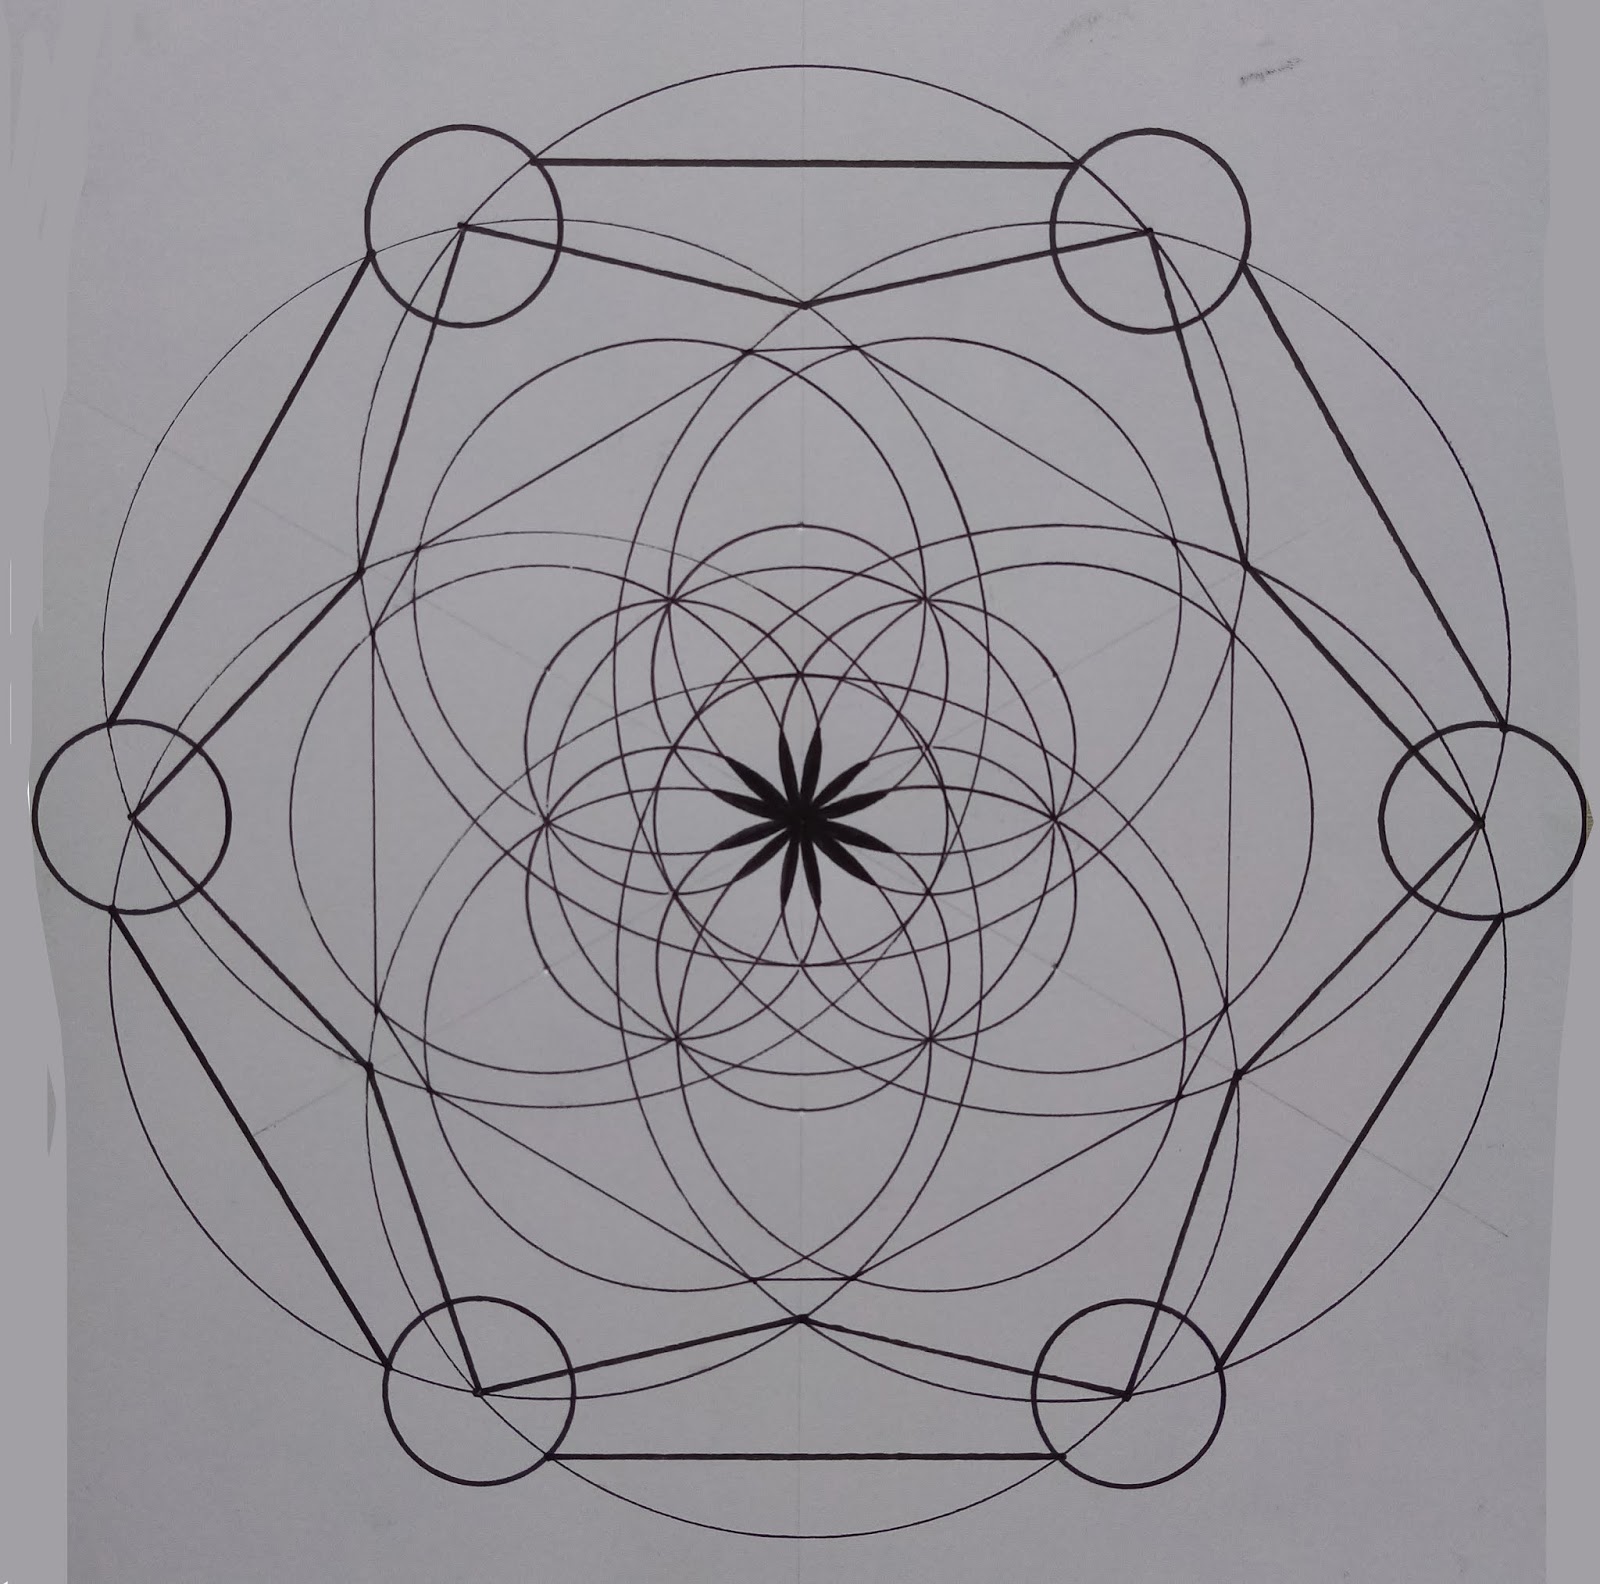 [SPOLYK] - Geometries & sketches - Page 6 IMG_20200323_151003